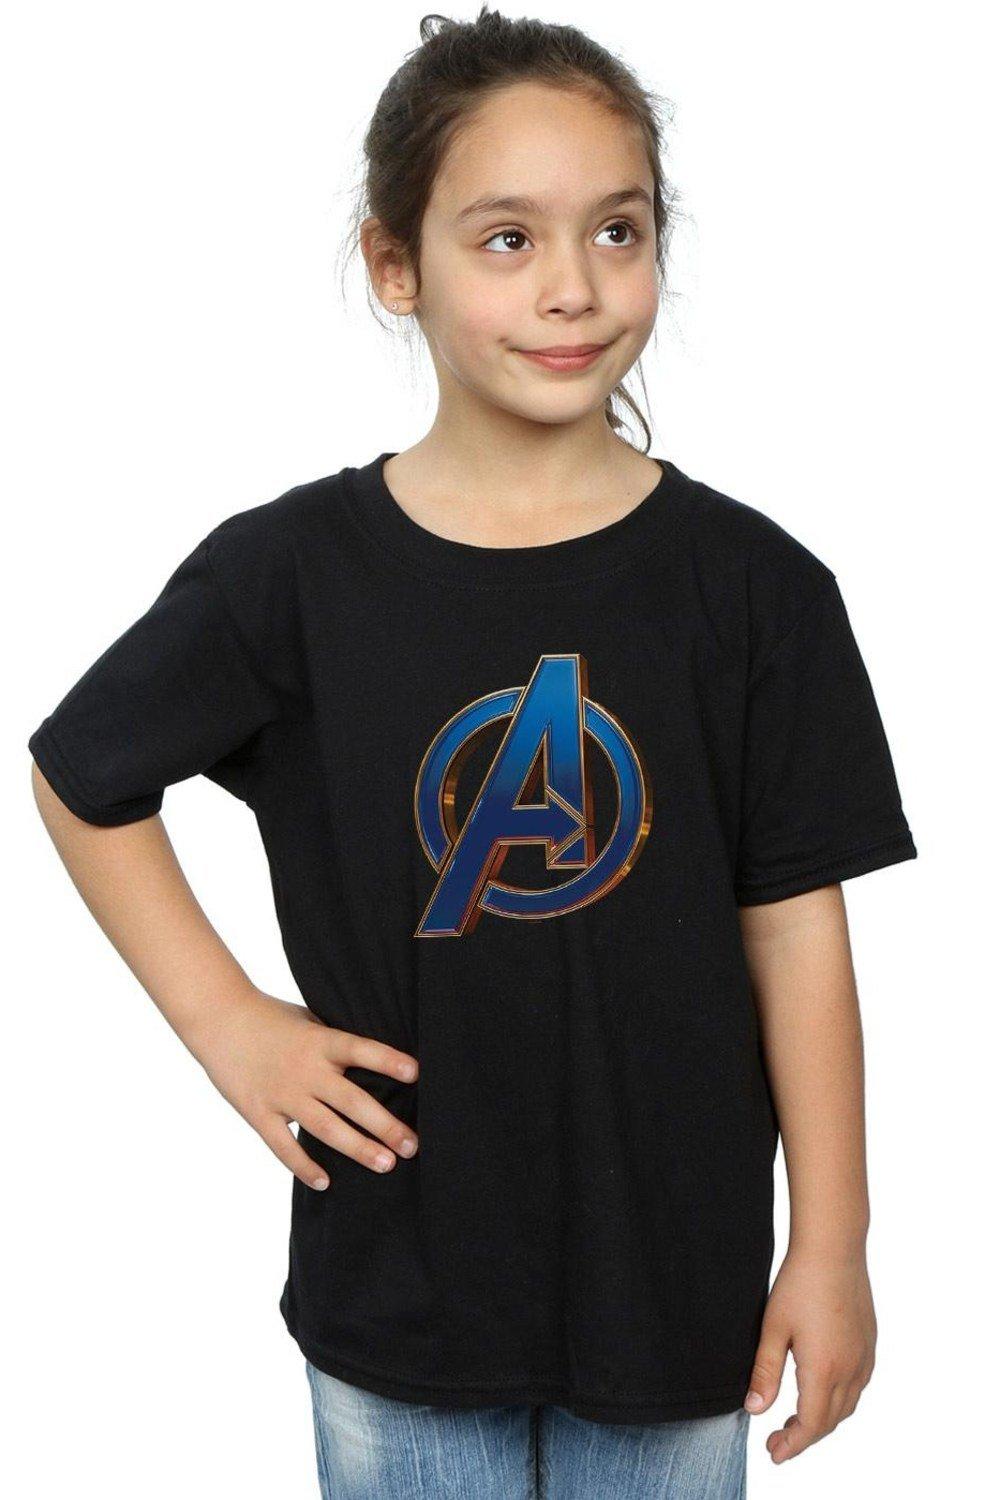 Avengers Endgame Heroic Logo Cotton T-Shirt